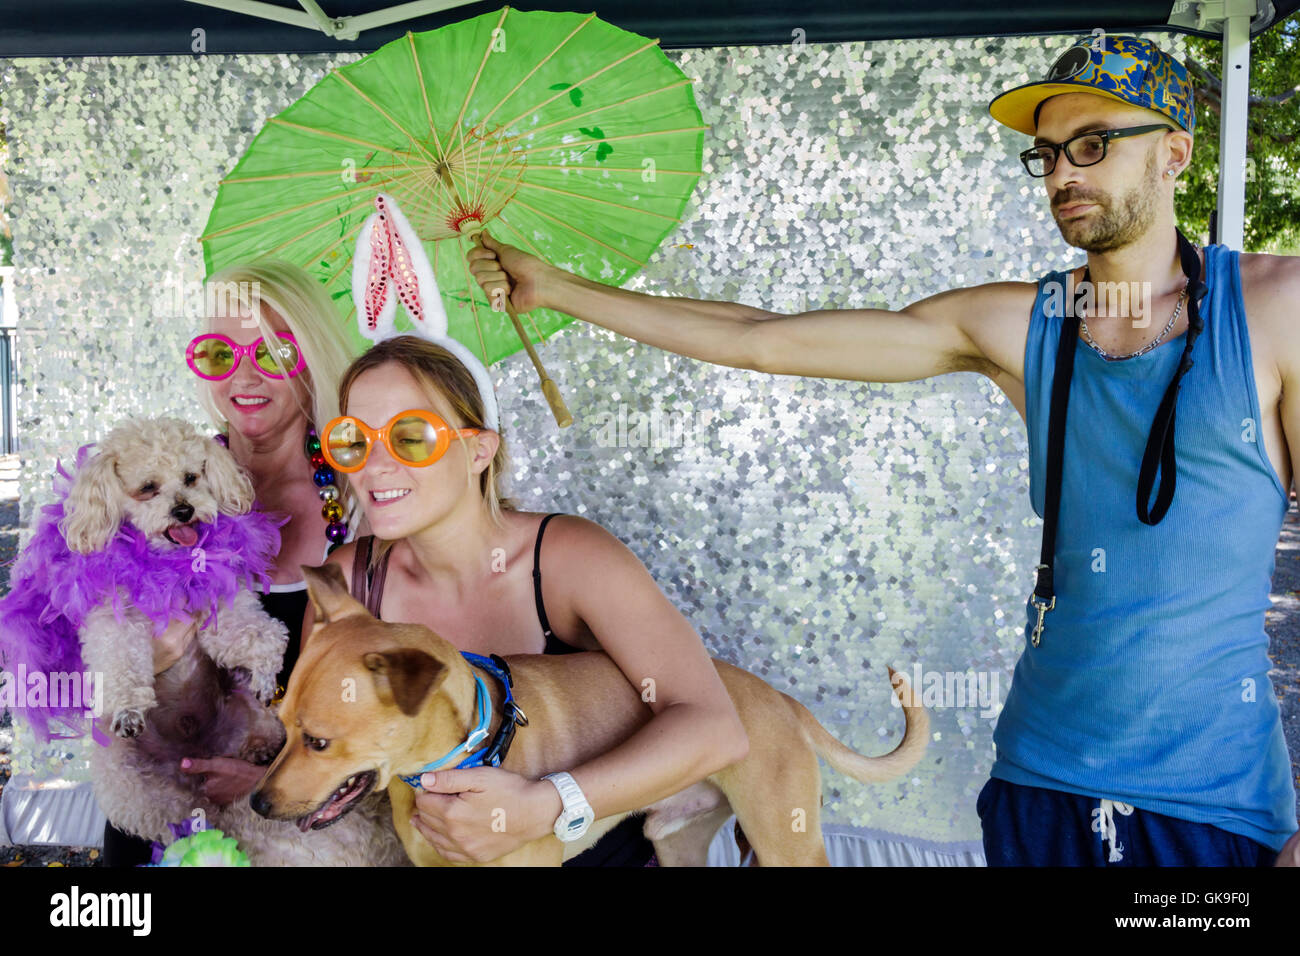 Miami Beach Florida,South Beach,SOFI,South of Fifth,neighborhood,Washington Avenue dog dogs Park,Wonder Doggie,superhero themed event,festival,adult a Stock Photo